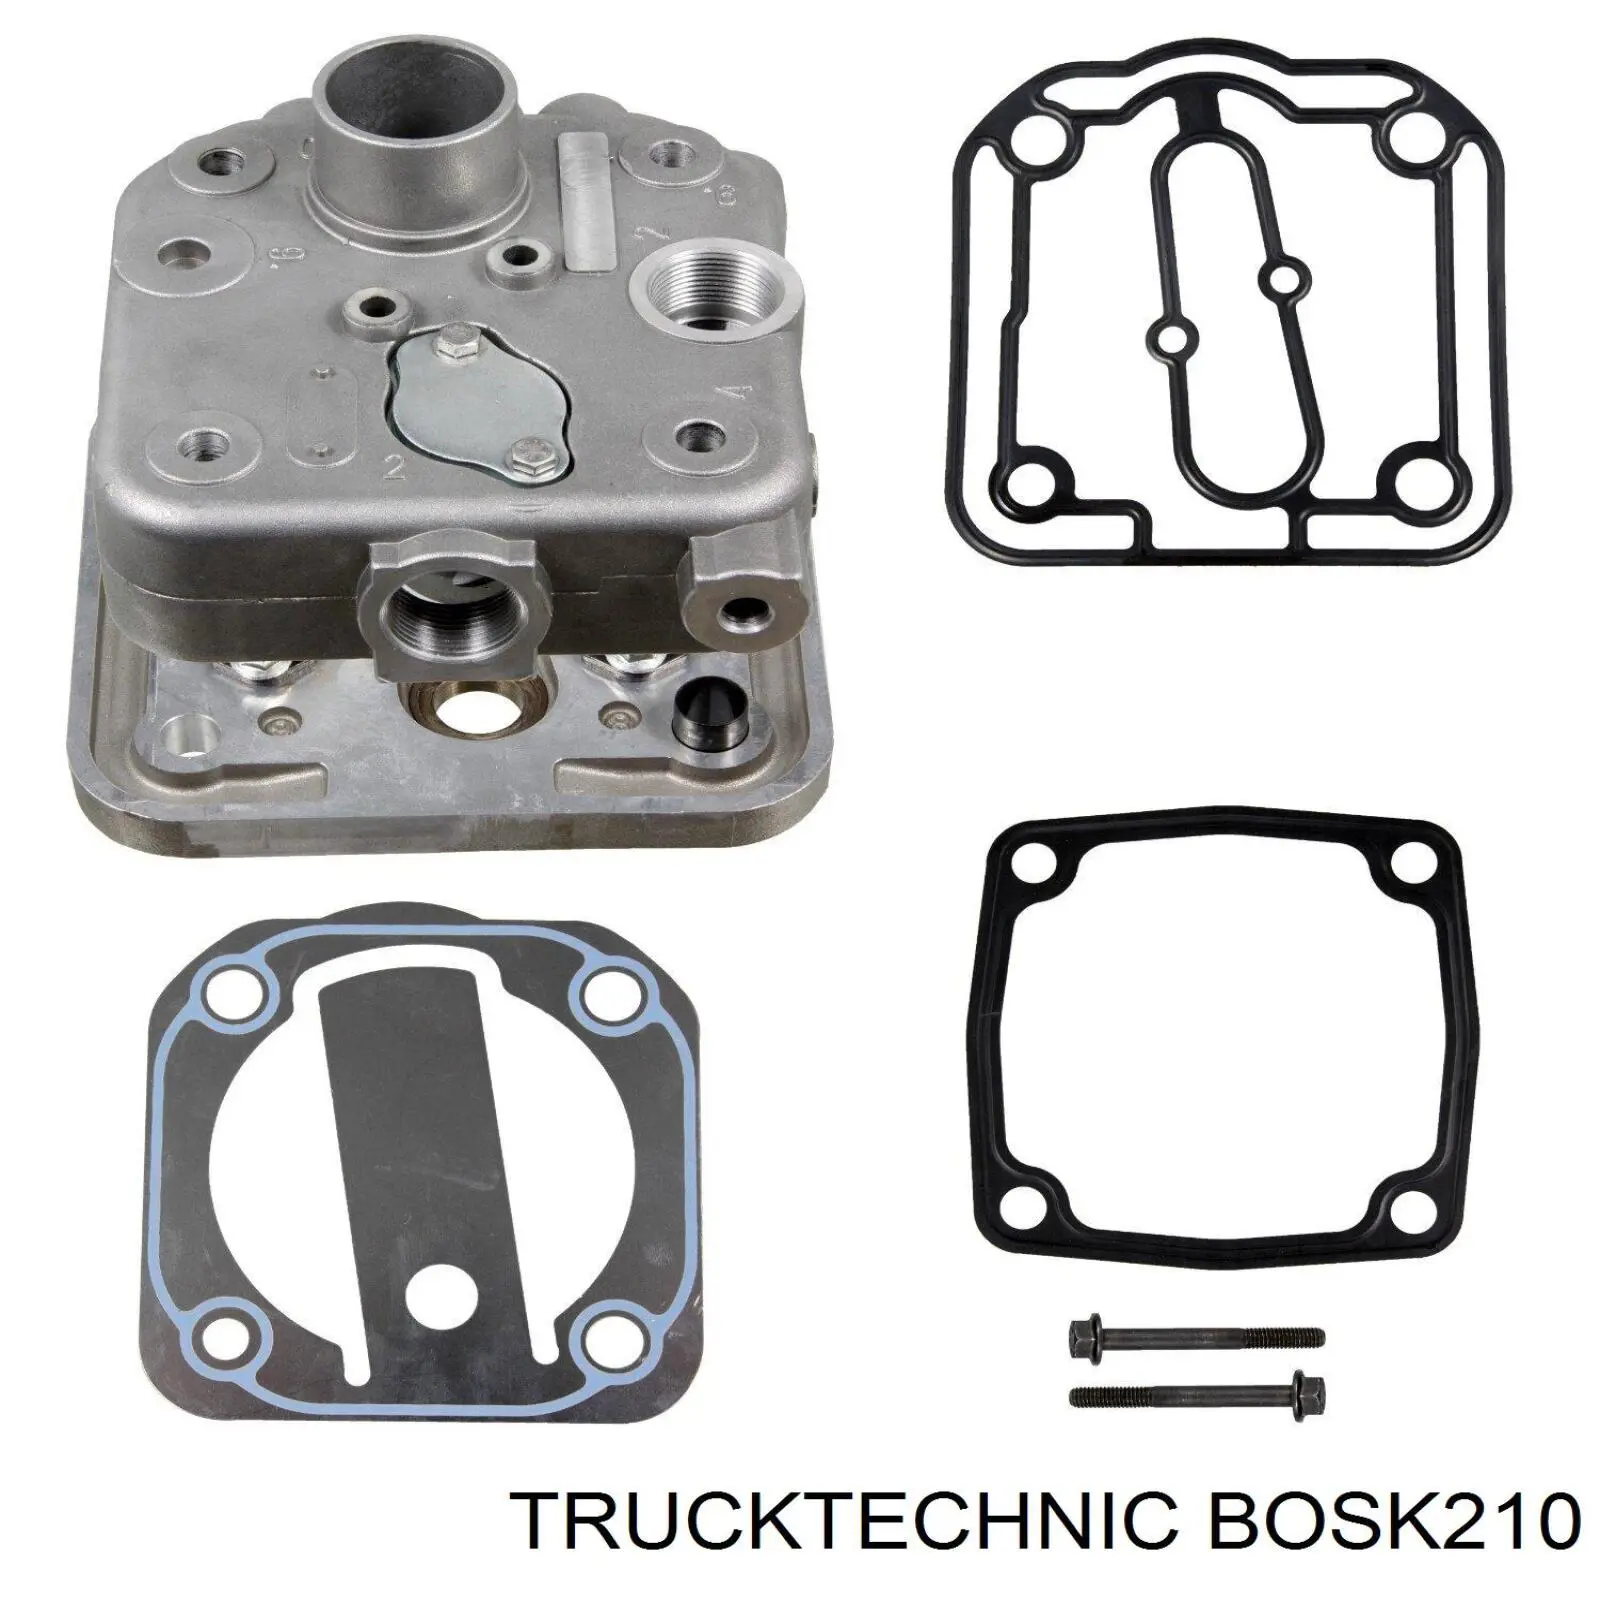 BOSK210 Trucktechnic компресор, ремкомплект, прокладки (truck)